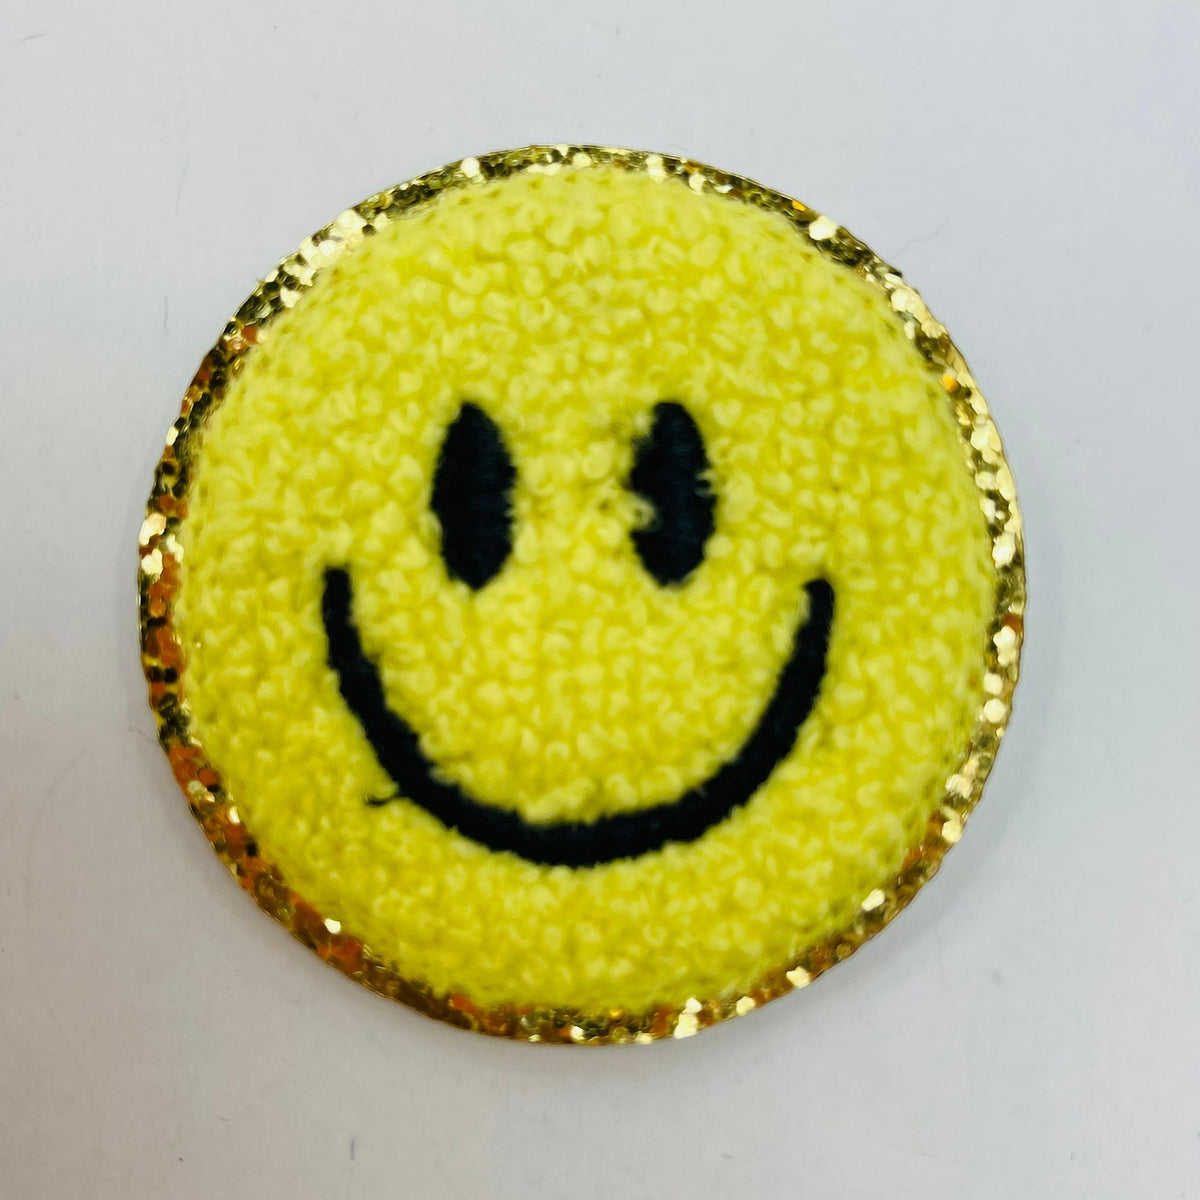 Parche adhesivo autoadhesivo con cara sonriente